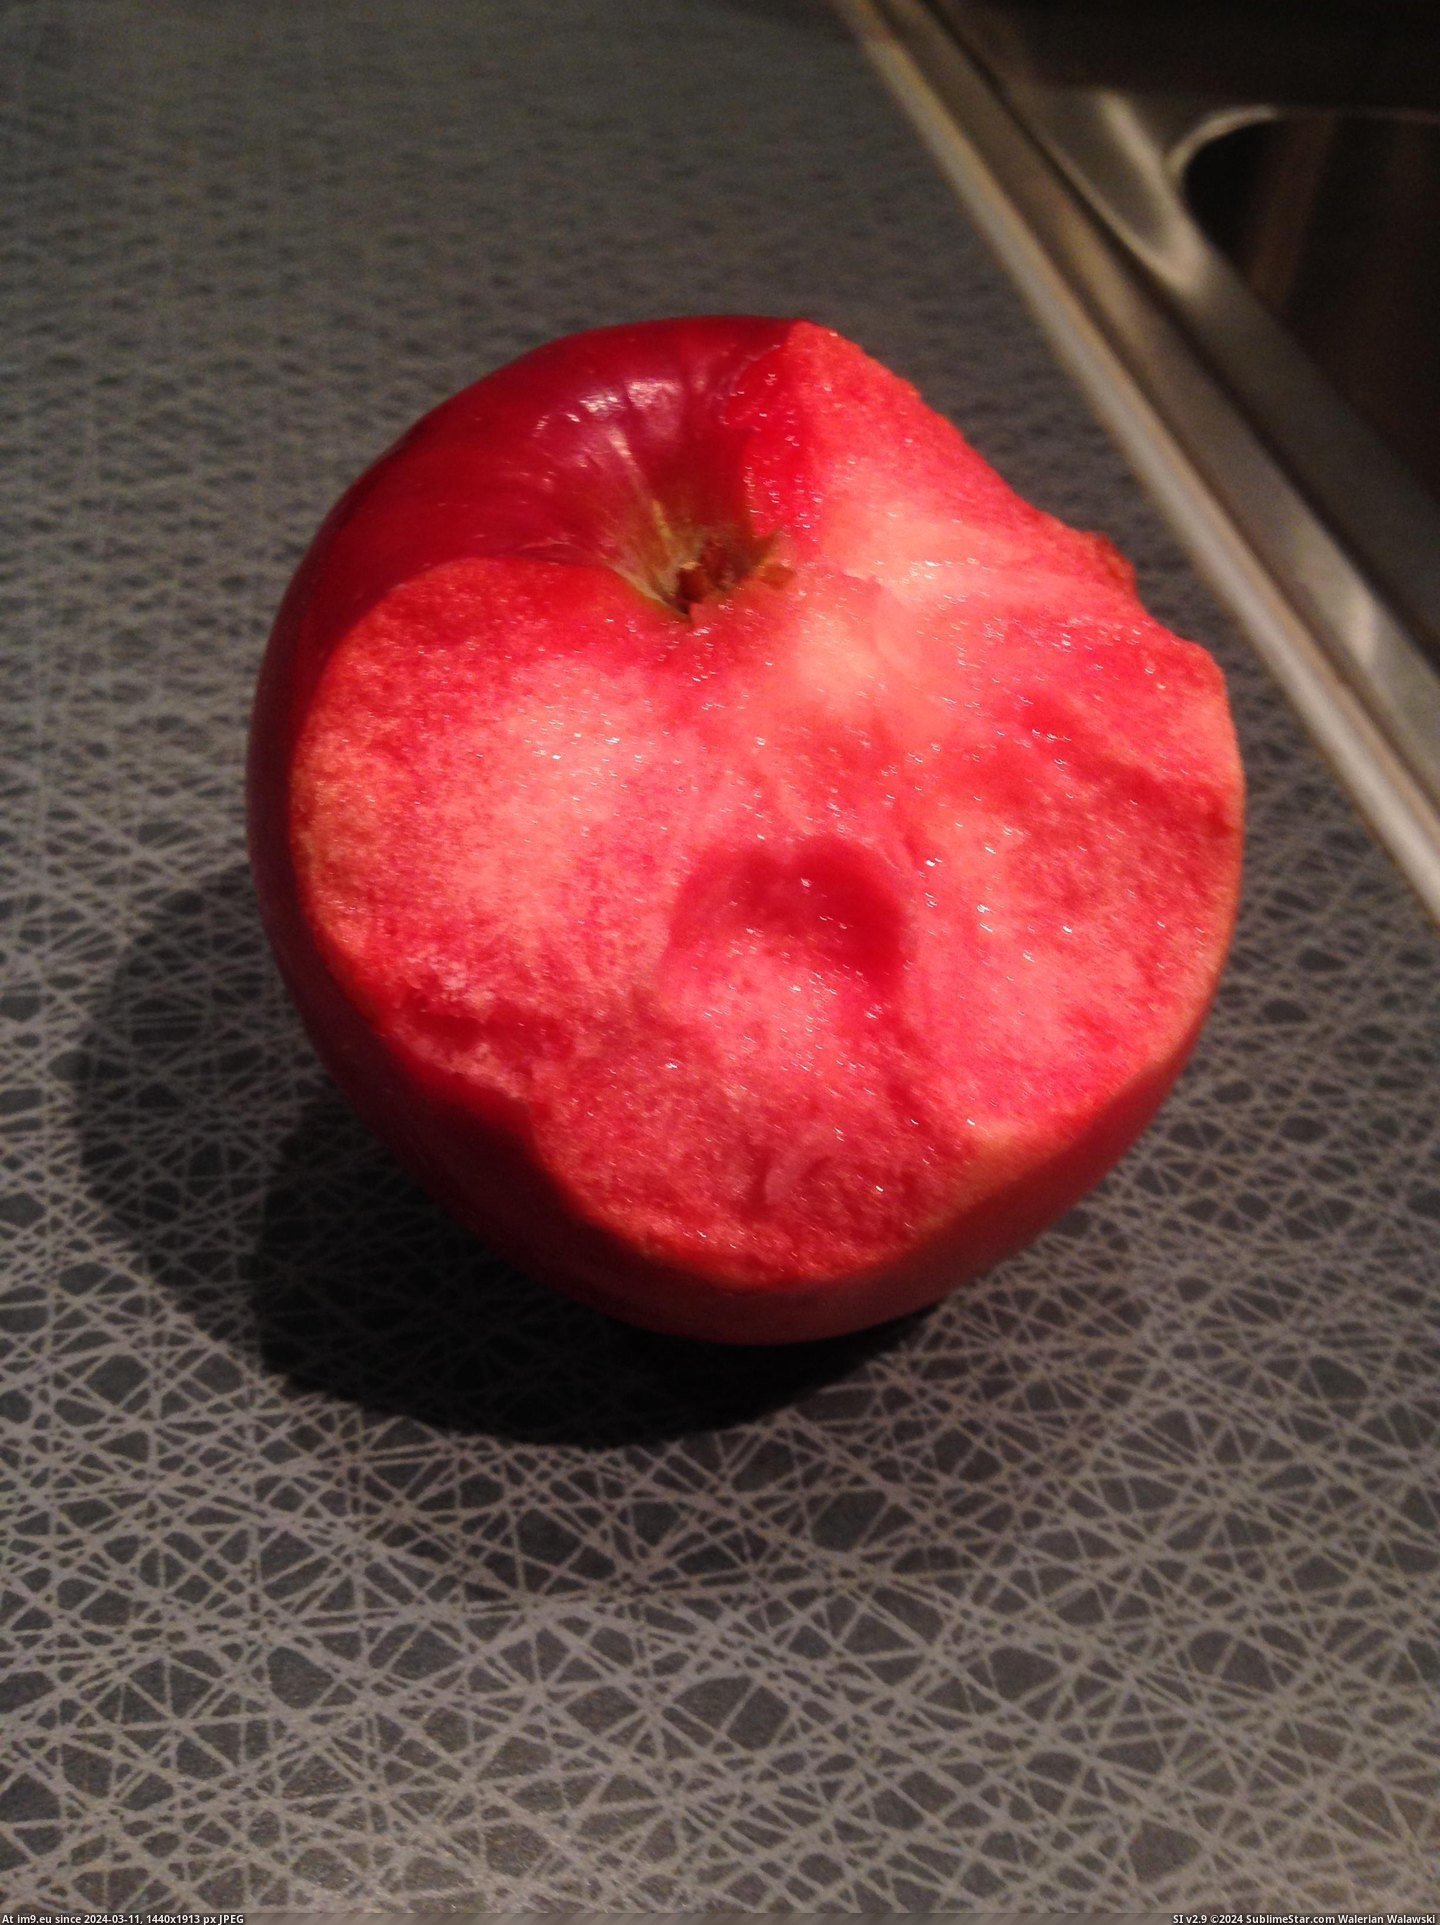 #Red #Ate #Flesh #Apple [Mildlyinteresting] I ate an apple with red flesh today Pic. (Изображение из альбом My r/MILDLYINTERESTING favs))